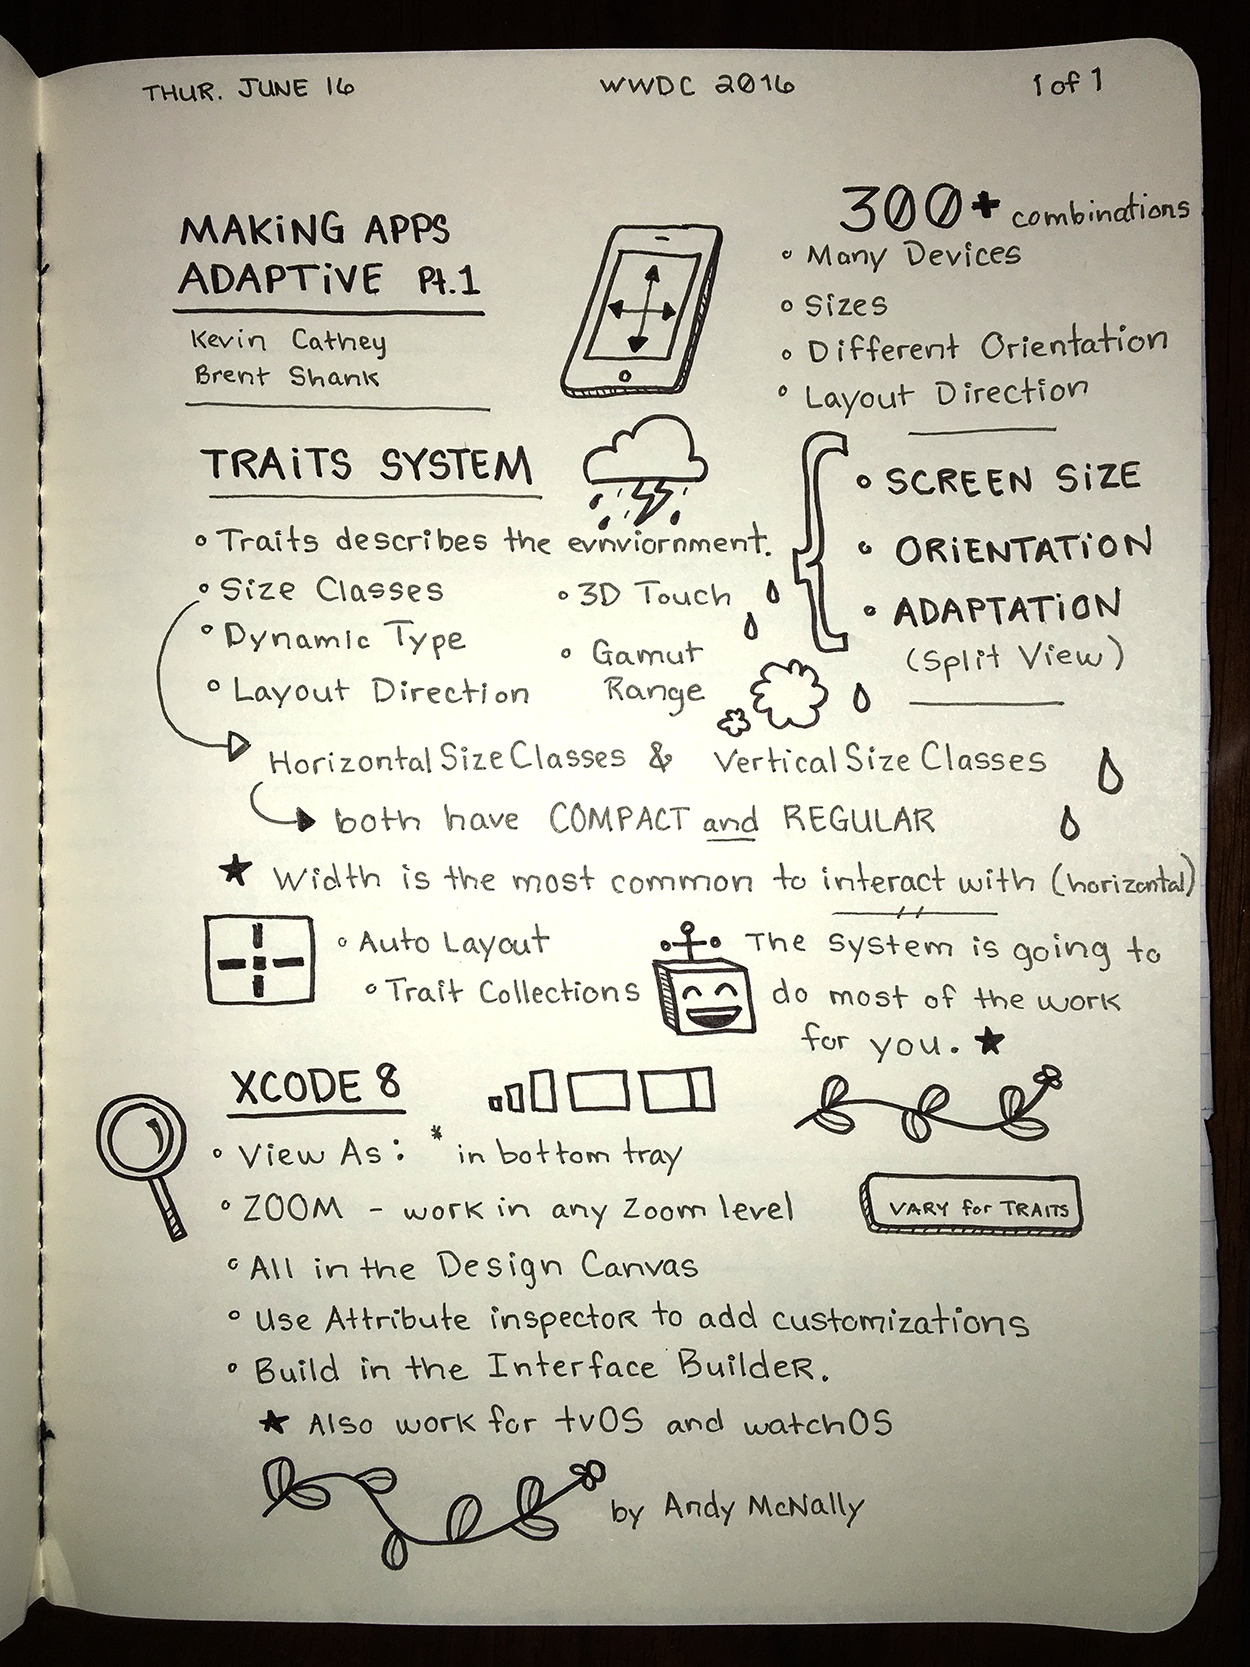 WWDC sketchnotes - Making Apps Adaptive Pt. 1